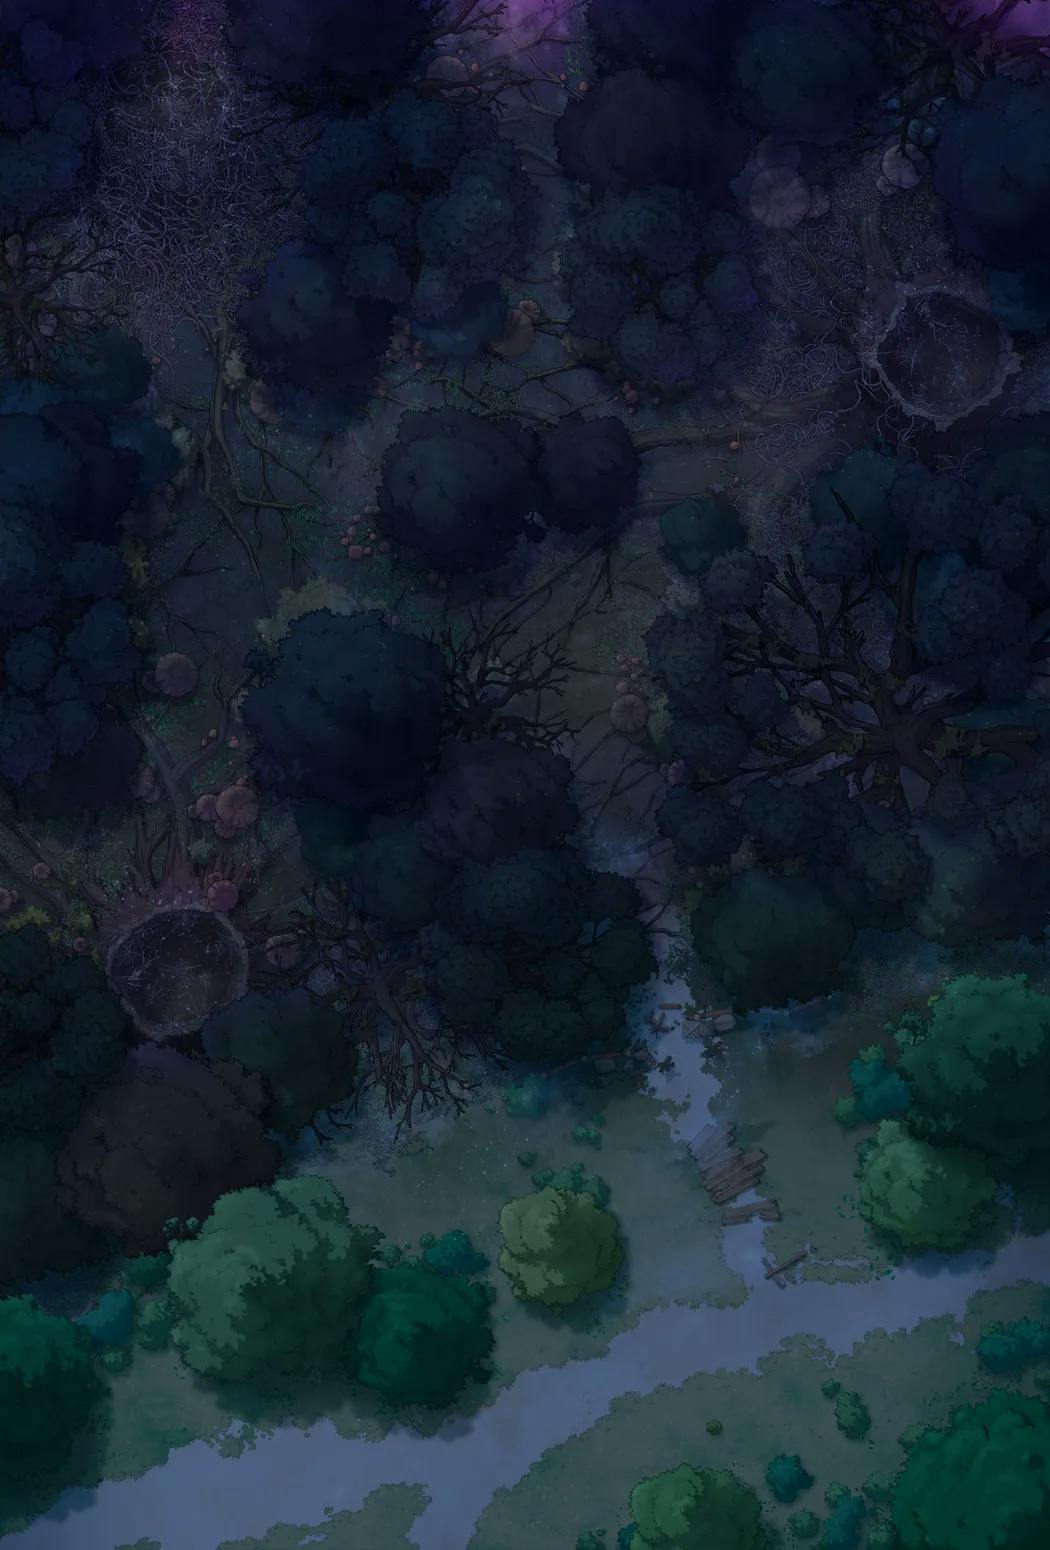 Dark Woods Edge map, Original Night variant